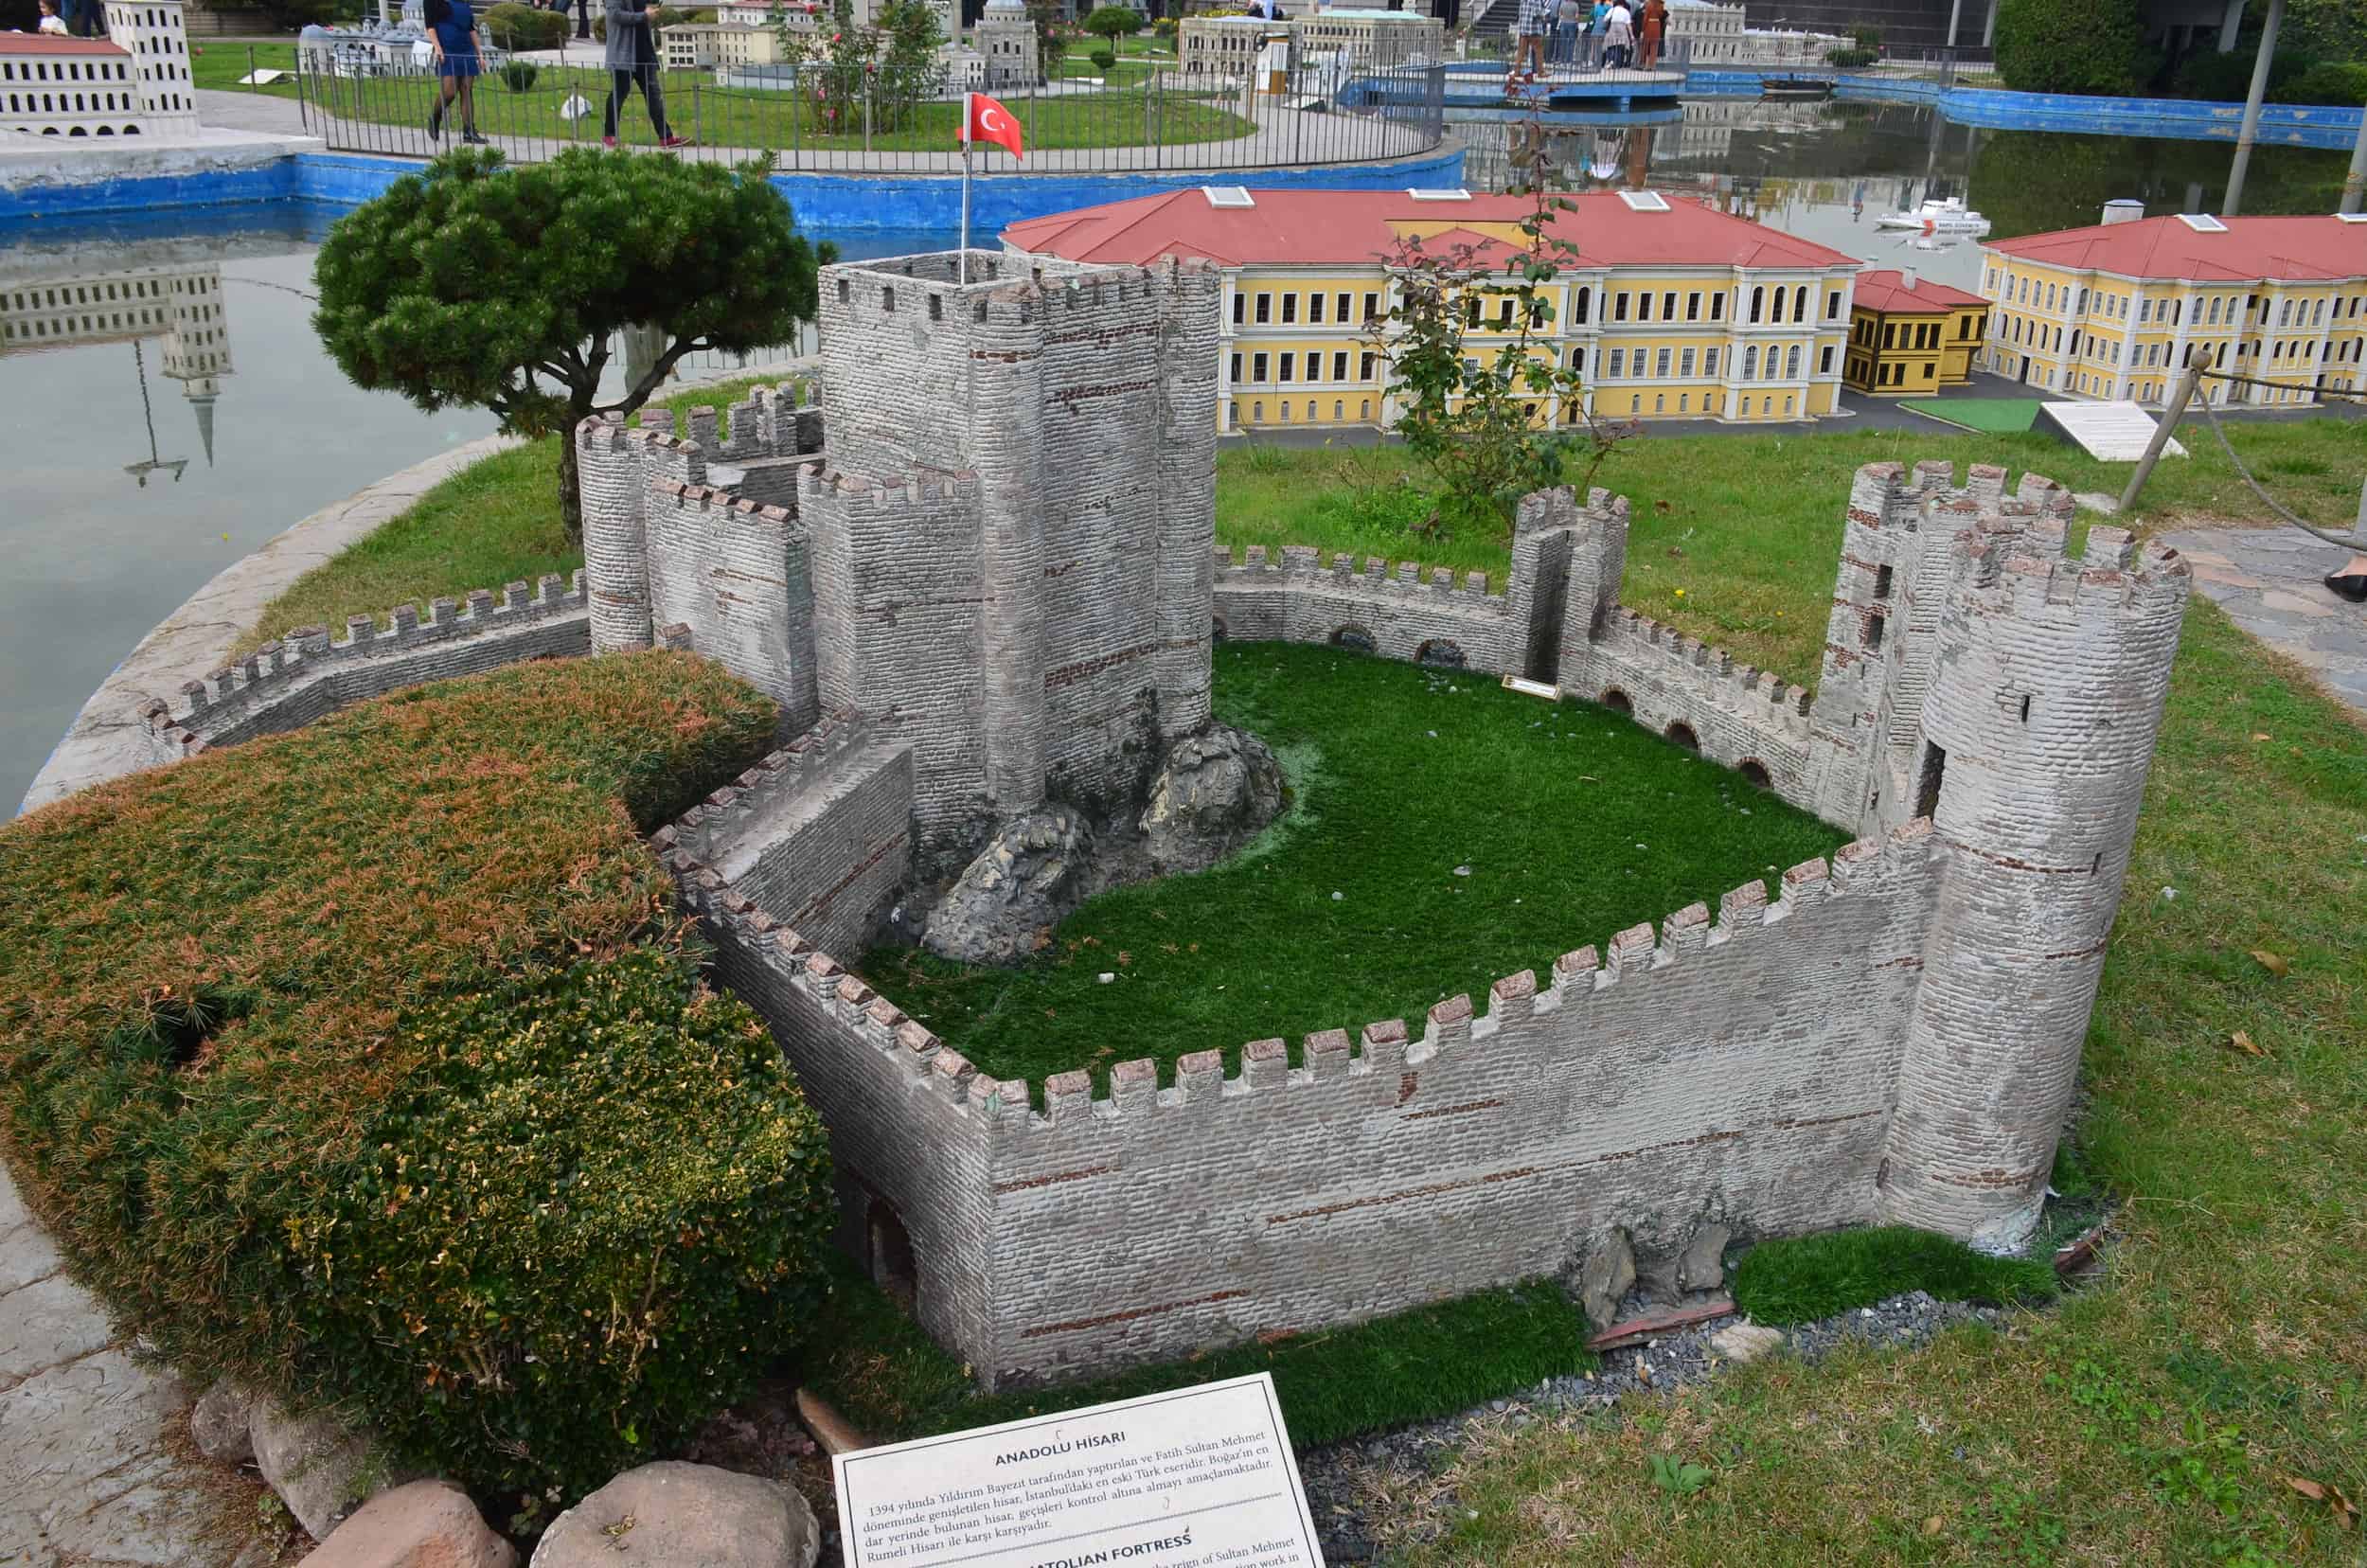 Model of Anatolian Fortress, Anadolu Hisarı, 14th century at Miniatürk in Istanbul, Turkey